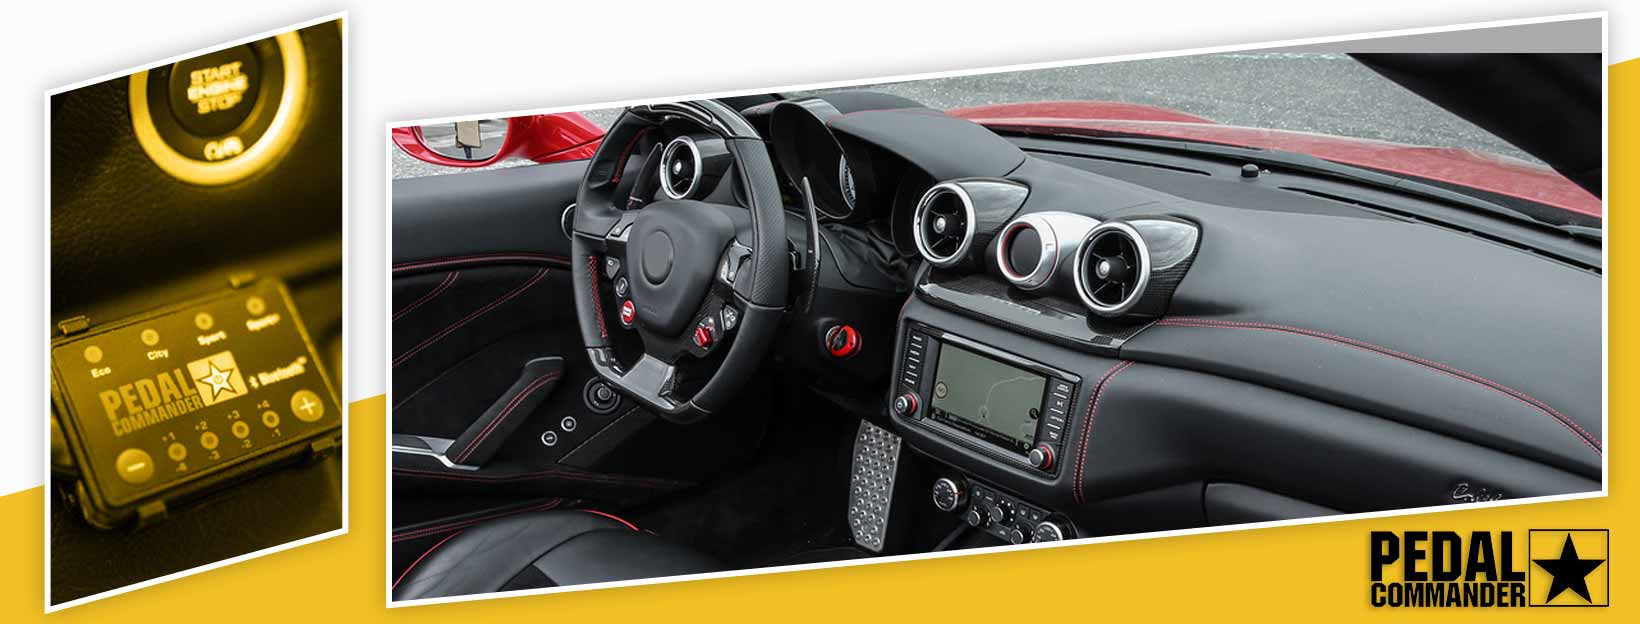 Pedal Commander for Ferrari California - interior